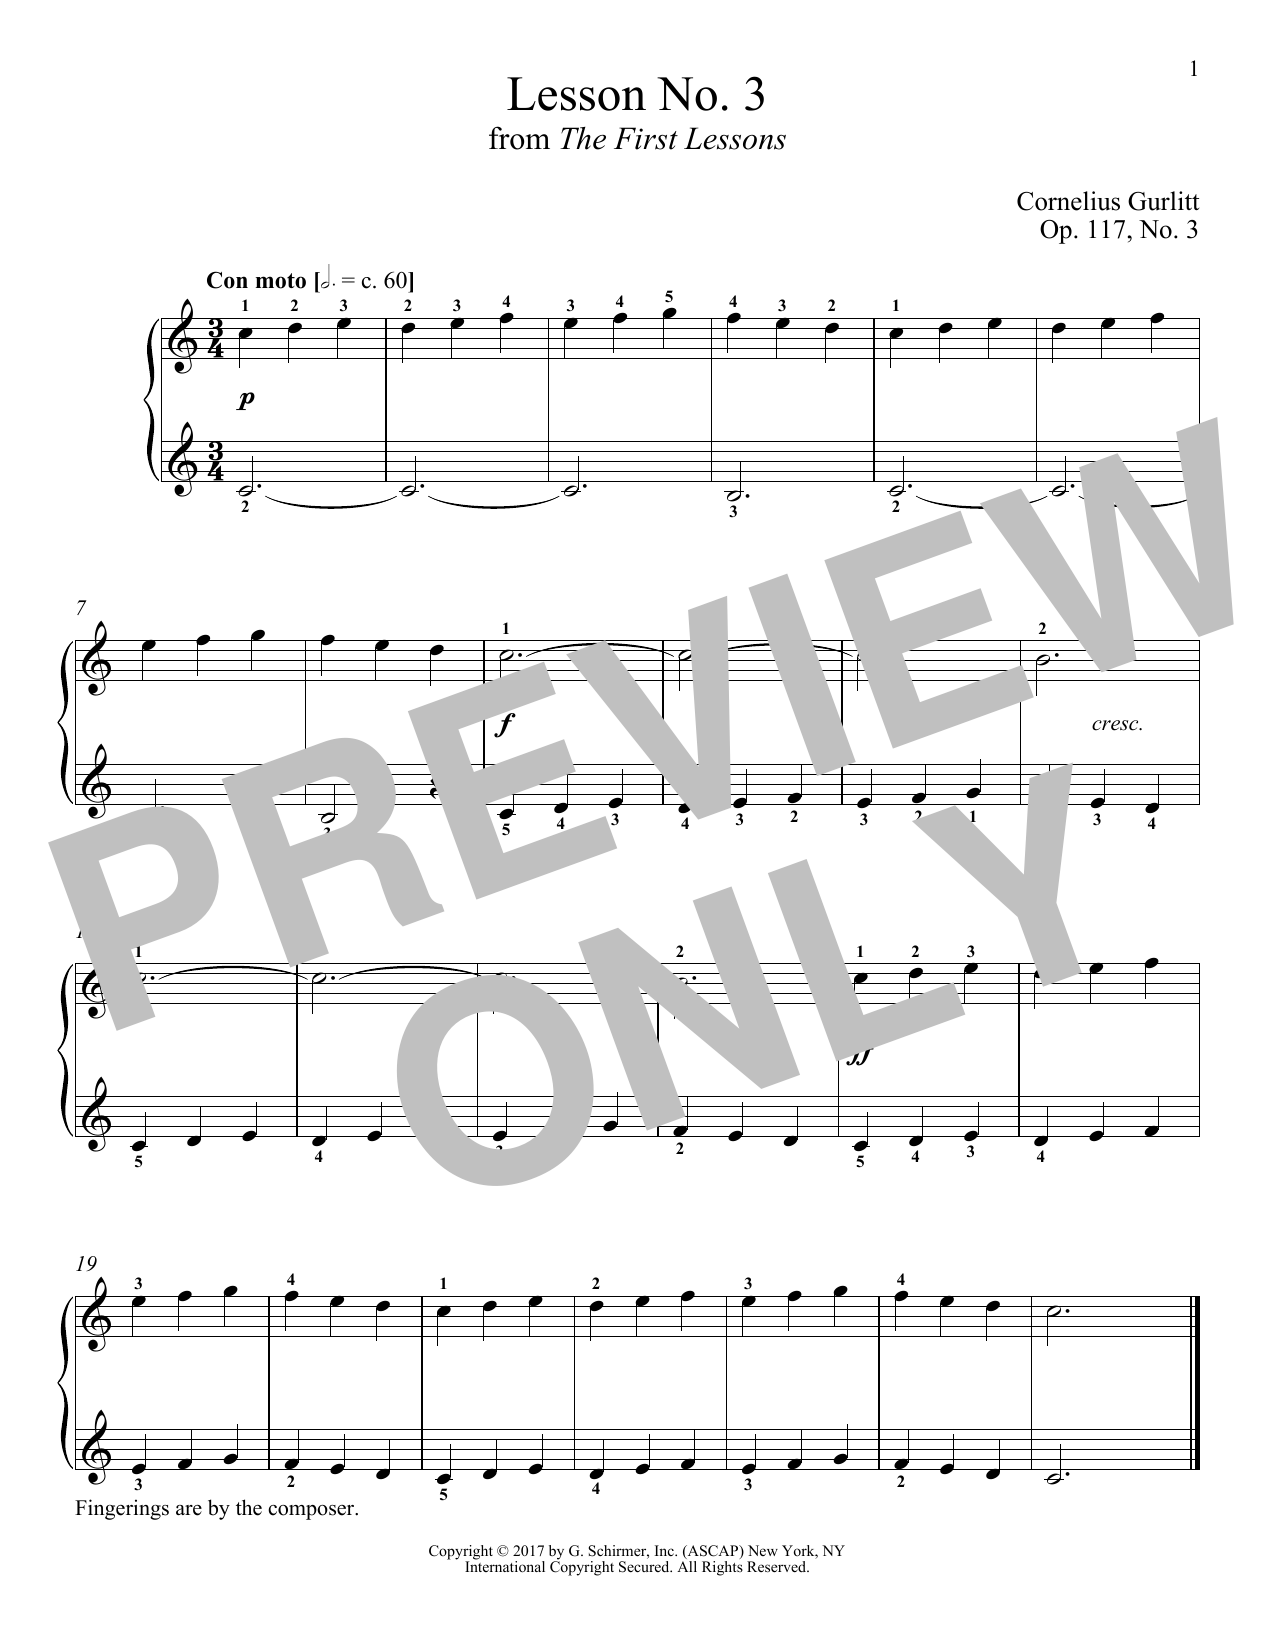 Cornelius Gurlitt Con moto, Op. 117, No. 3 sheet music notes and chords arranged for Piano Solo